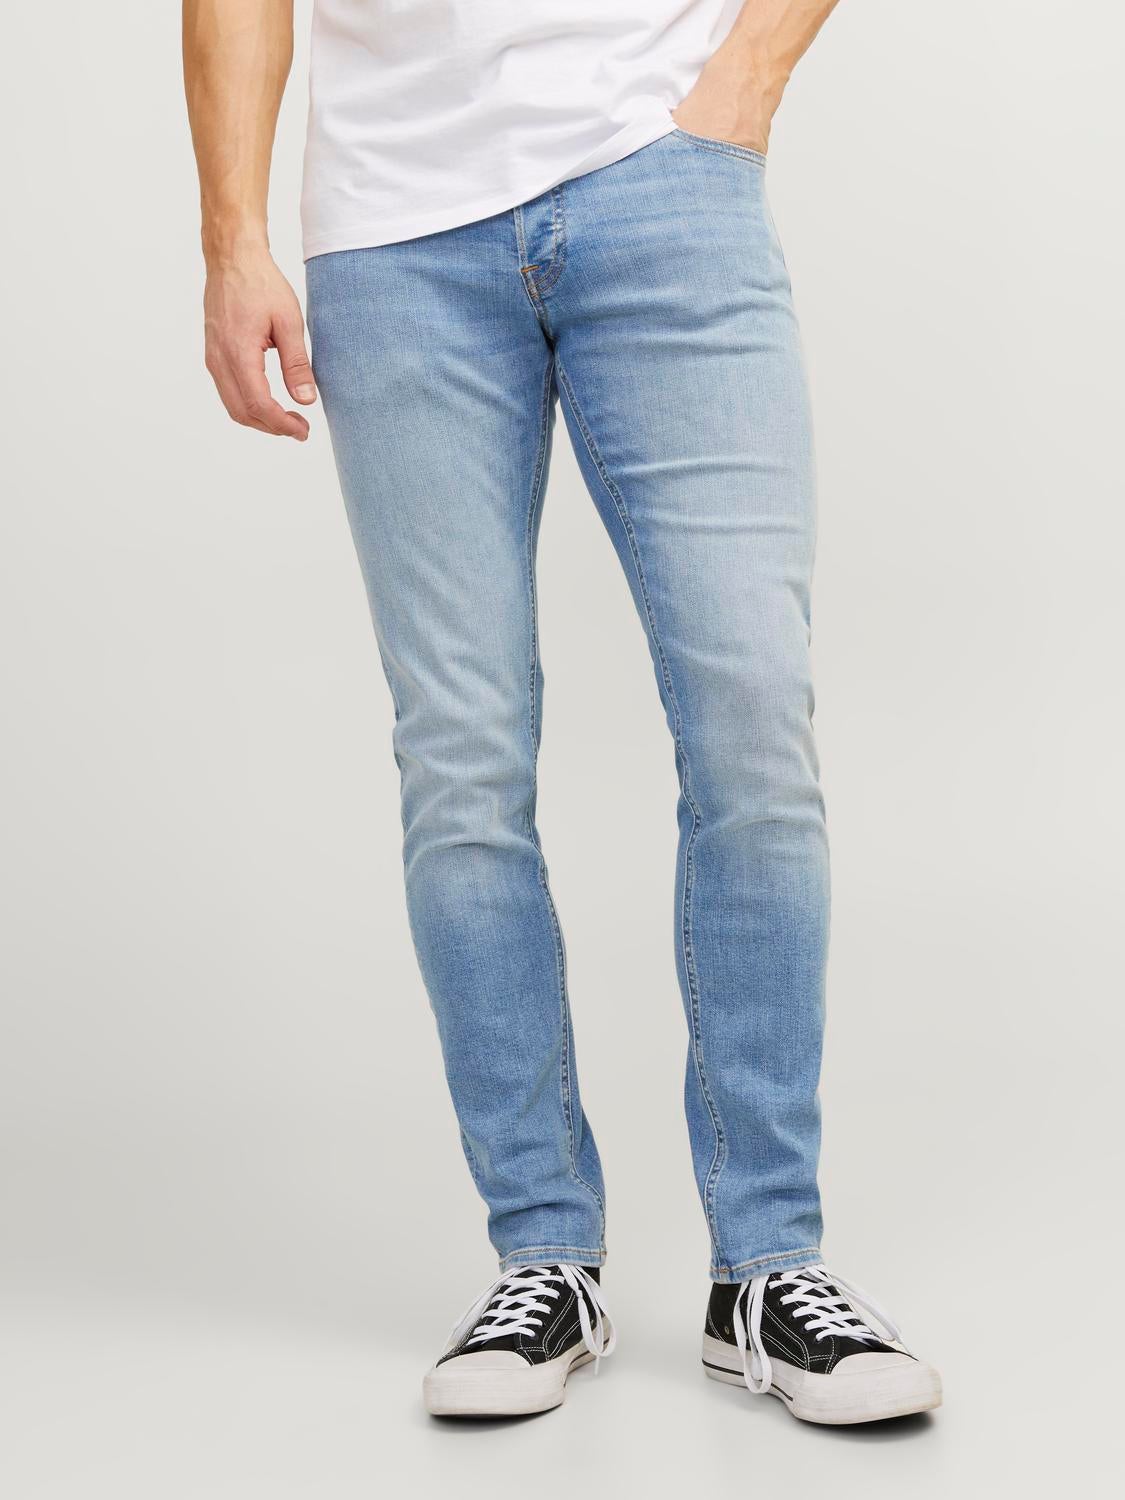 Buy Blue Black Skinny Fit Denim Deluxe Stretch Jeans Online at Muftijeans